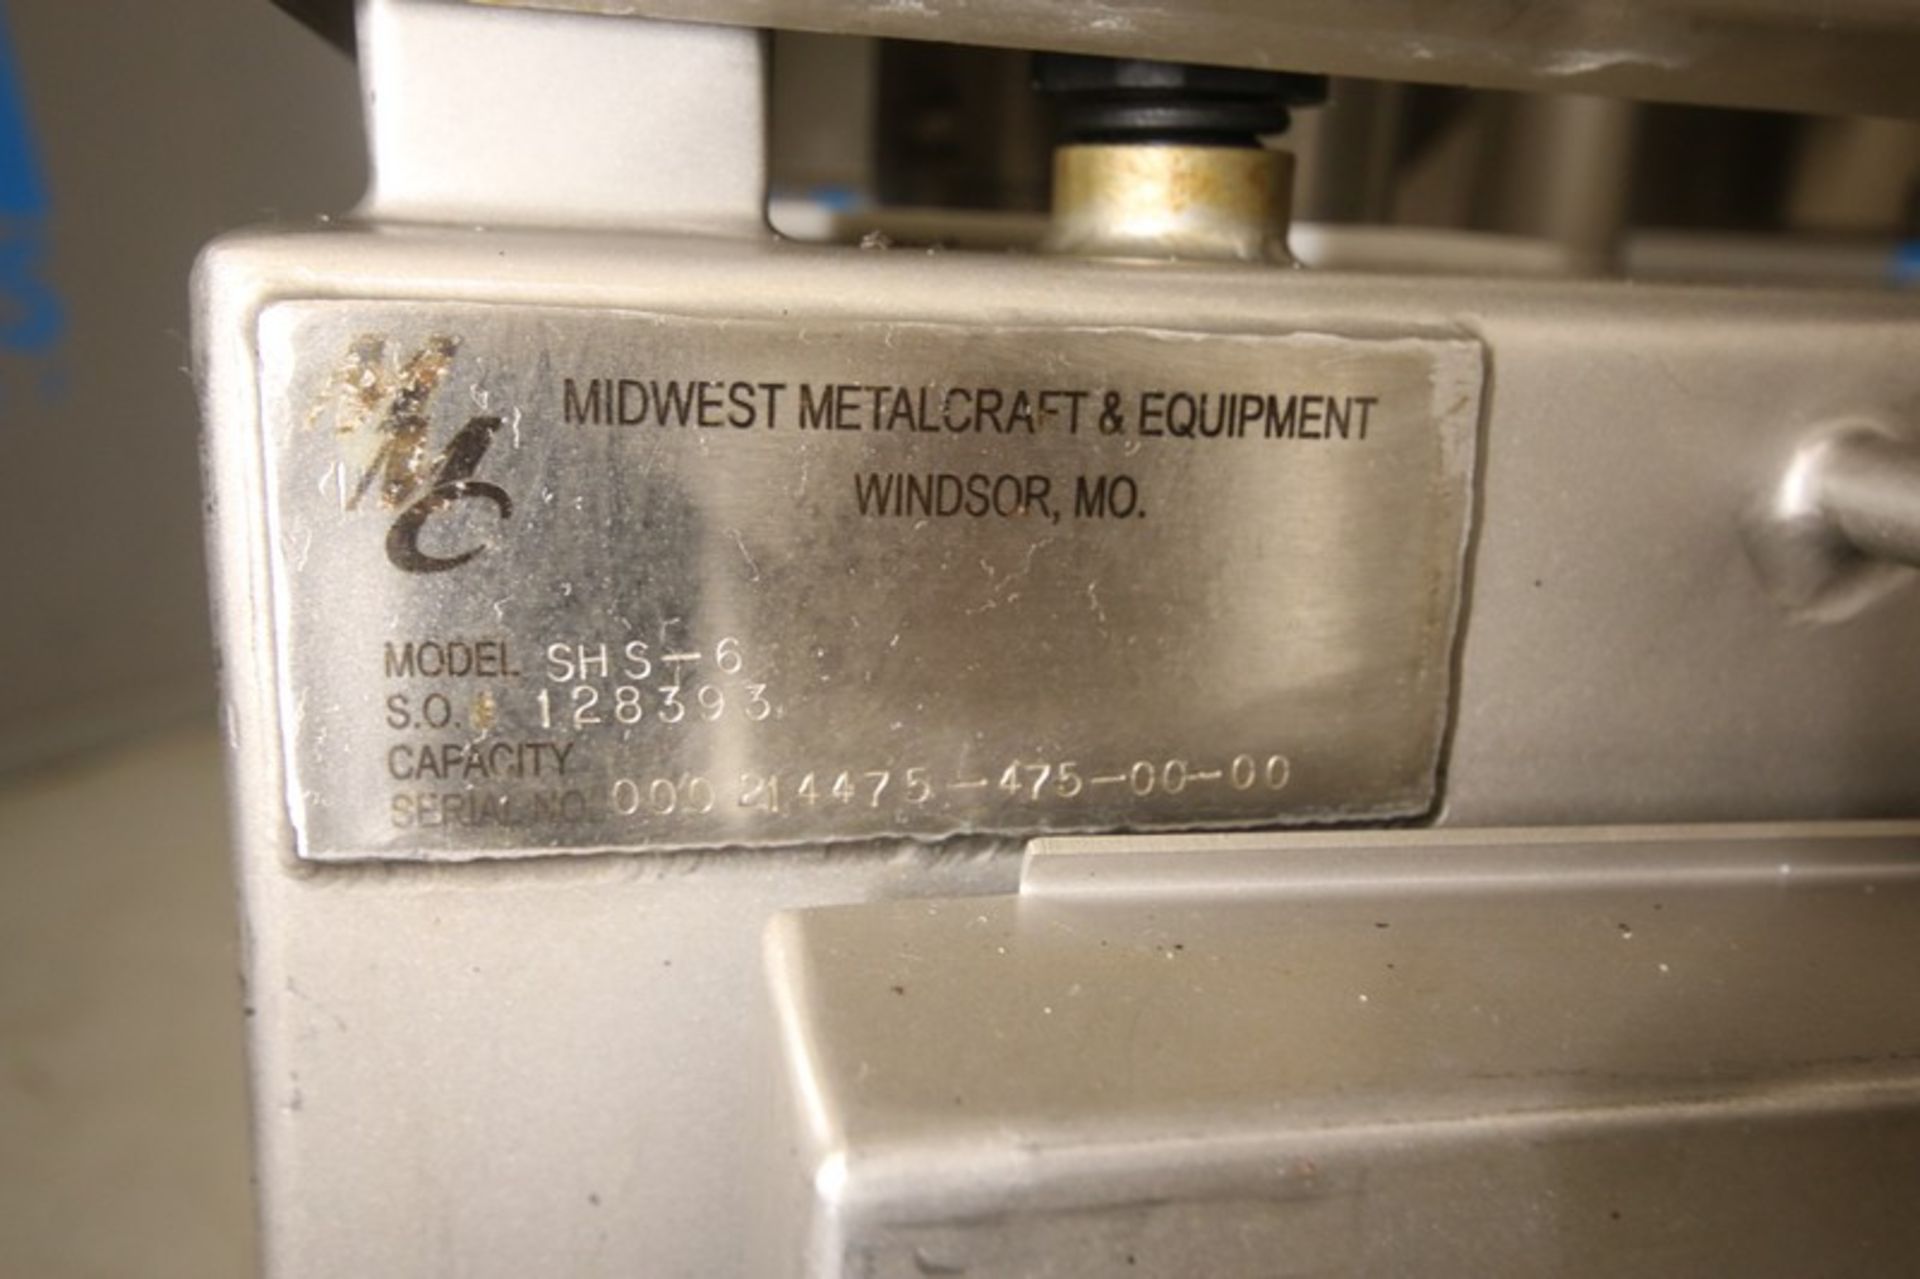 Midwest Metalcraft Equipment Spirocutter,Model SHS-6, SN 000214475-475-00-00, Mitsubishi Melsec - Image 9 of 9